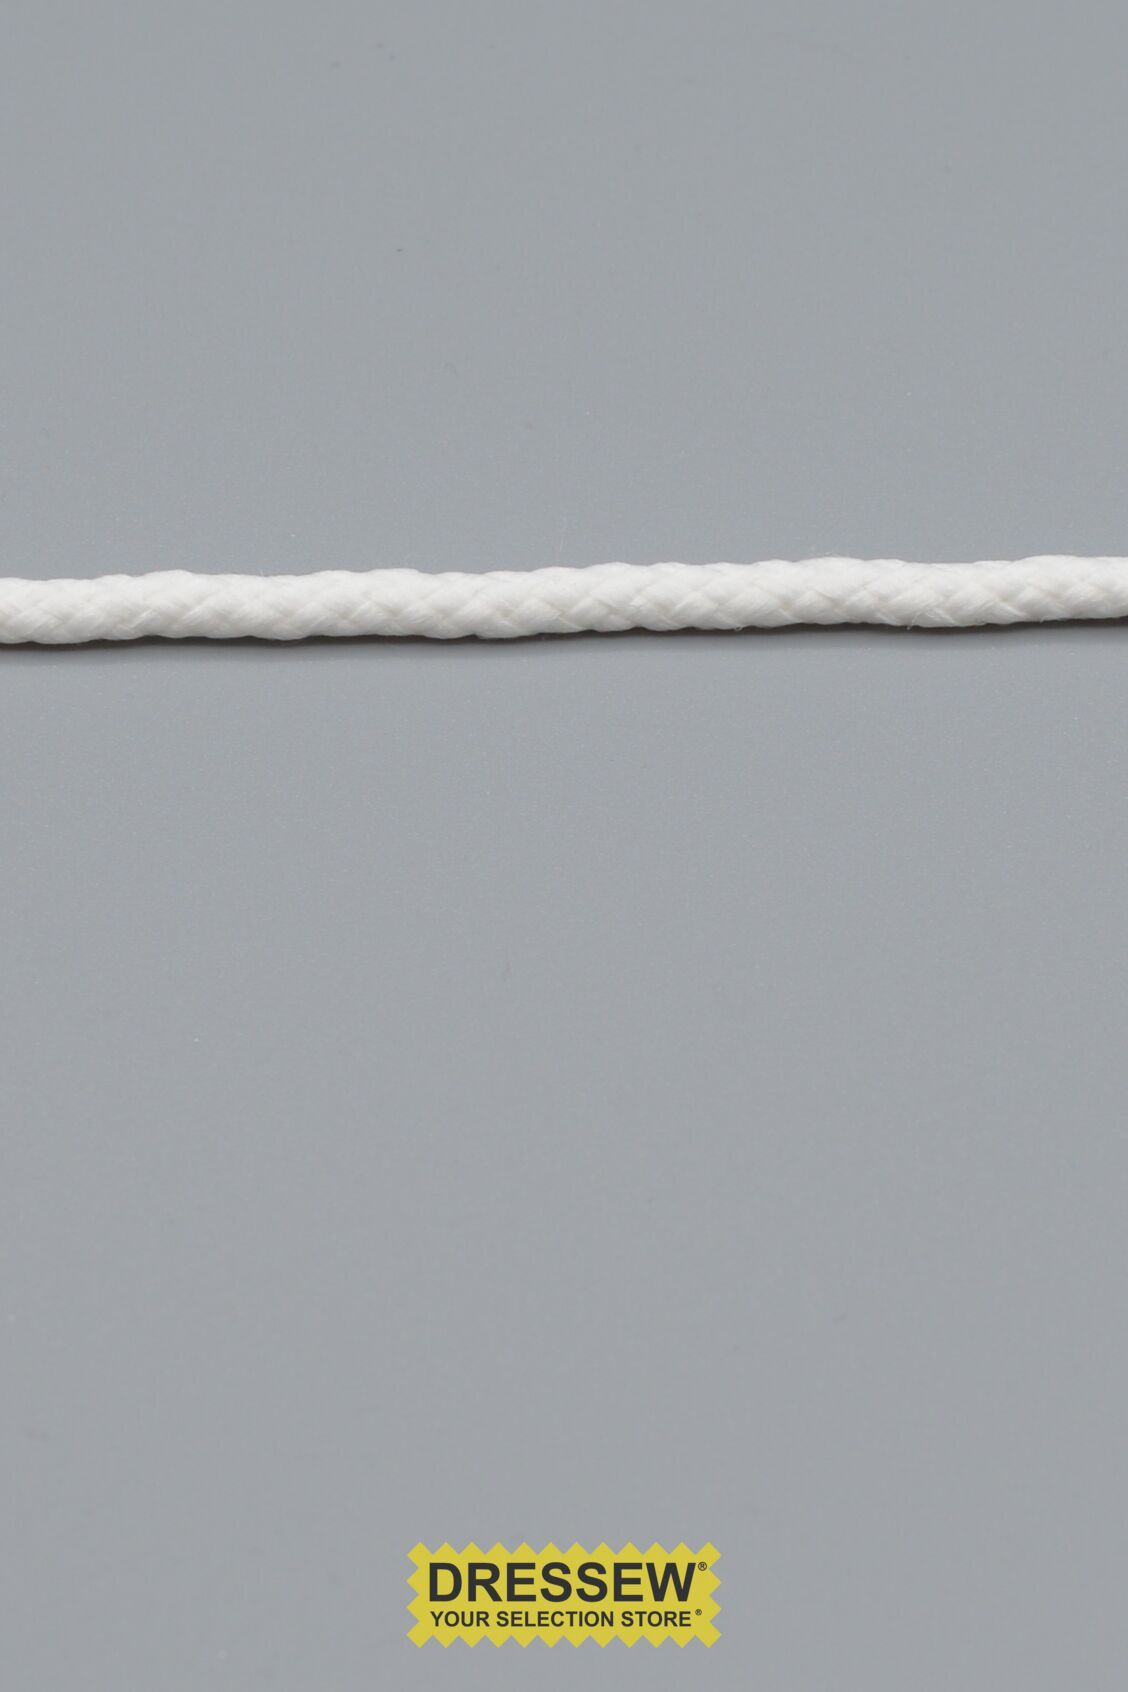 Braided Cord 4mm White